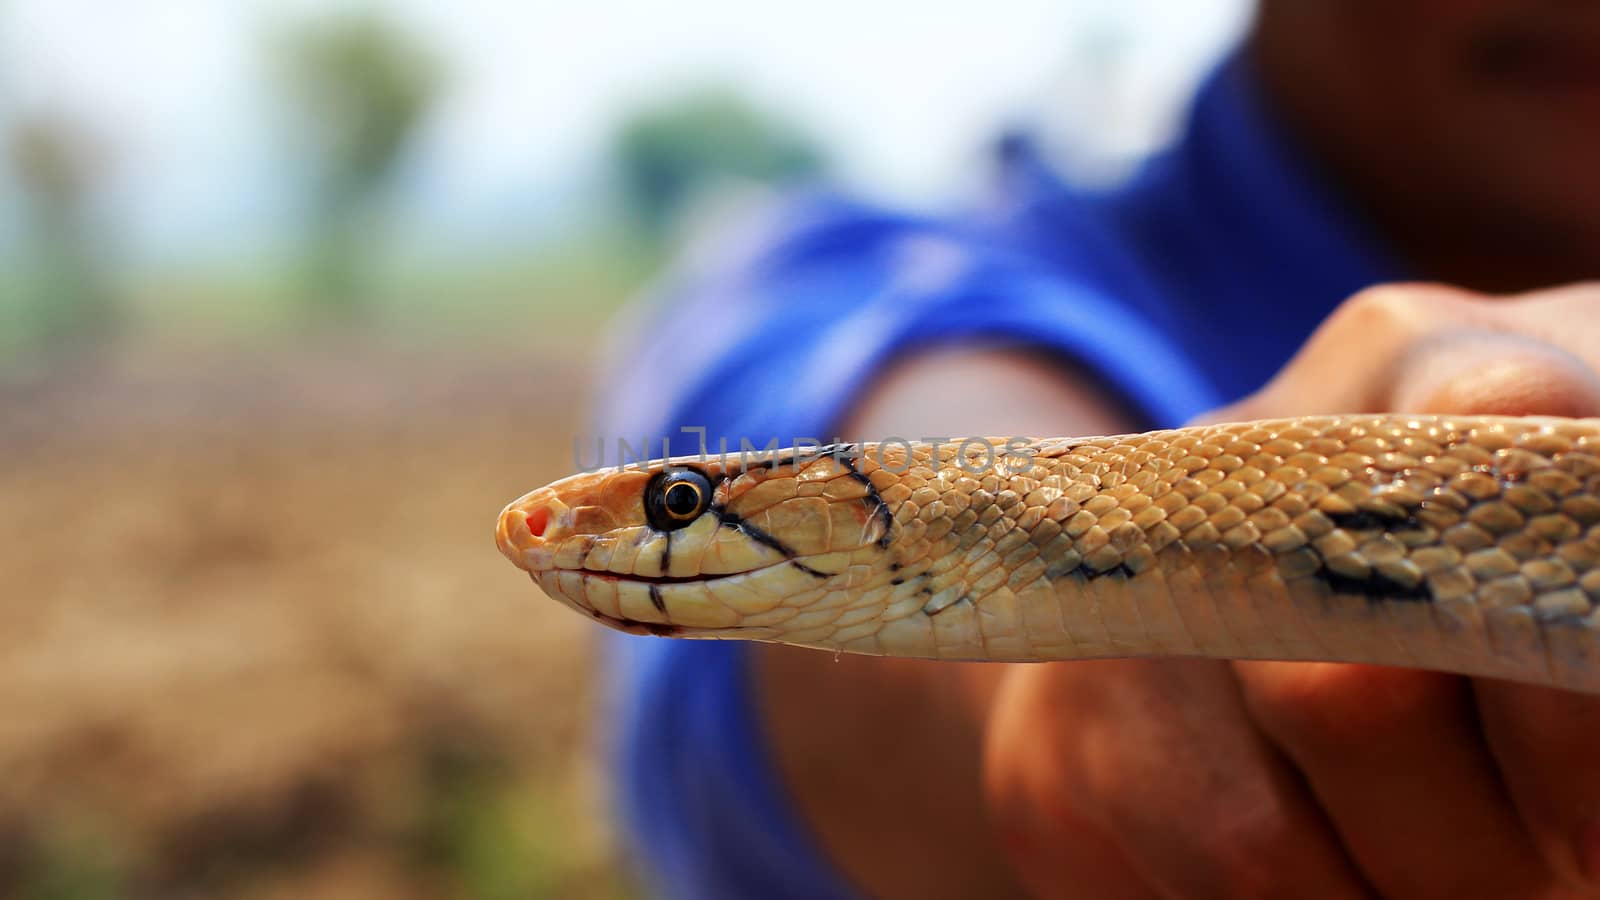 Indochinese rat snake